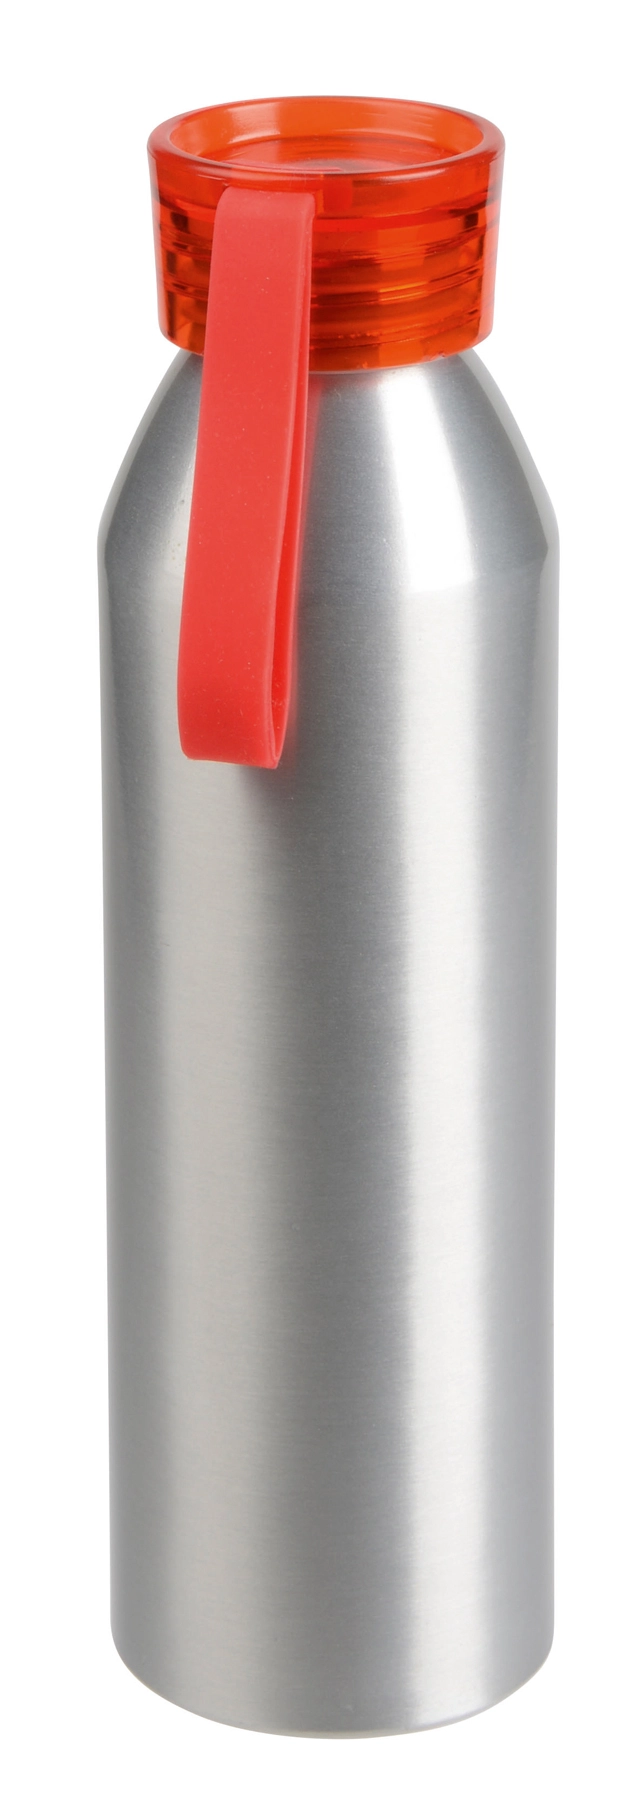 Aluminiowa butelka COLOURED, czerwony 56-0304427